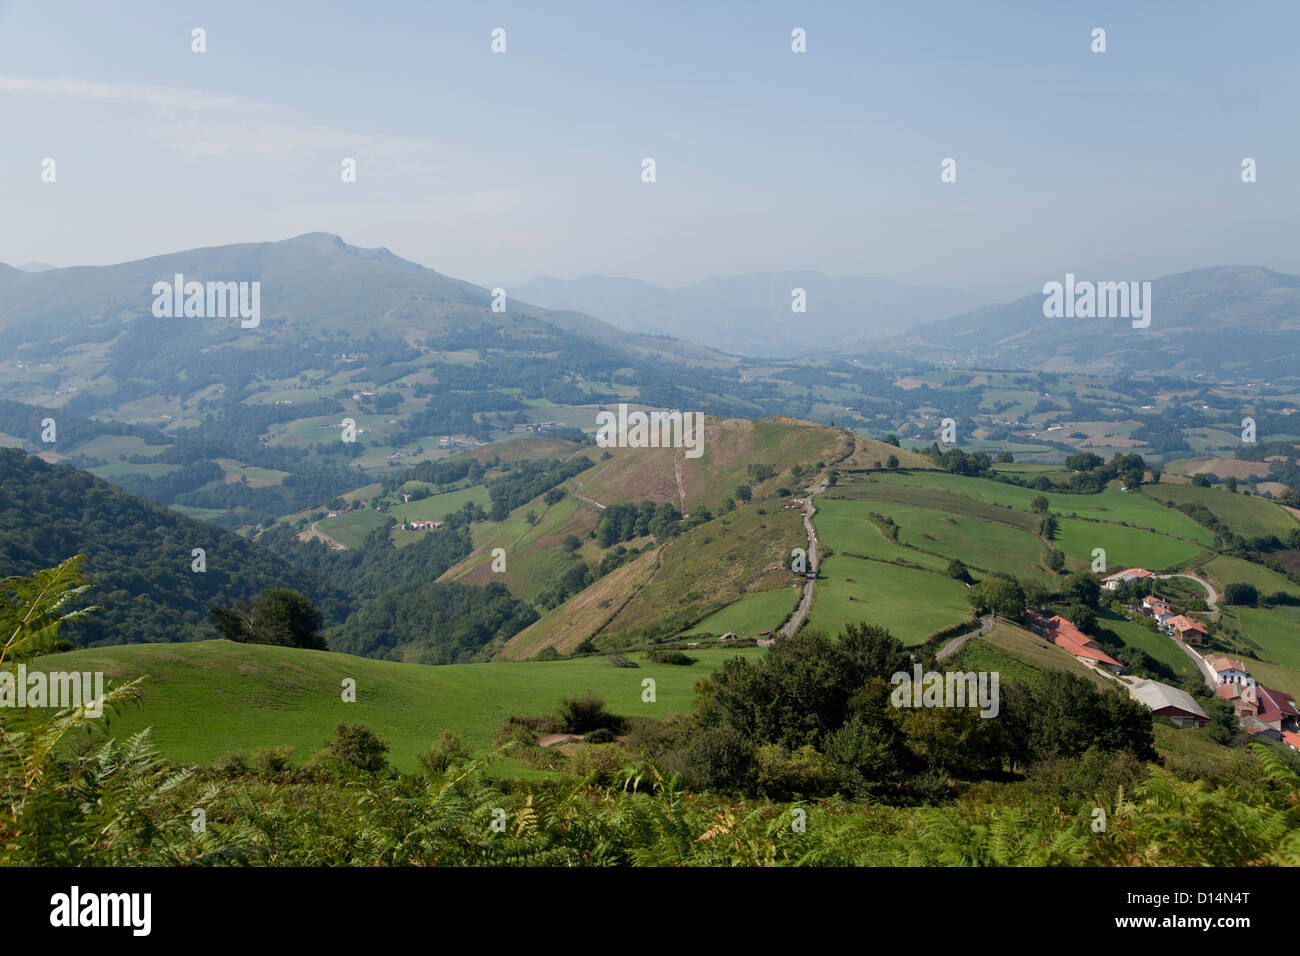 Die grünen Hügel der Pyrenäen, Südfrankreich, entlang des Camino de Santiago De Compostela Pilgerreise. Stockfoto